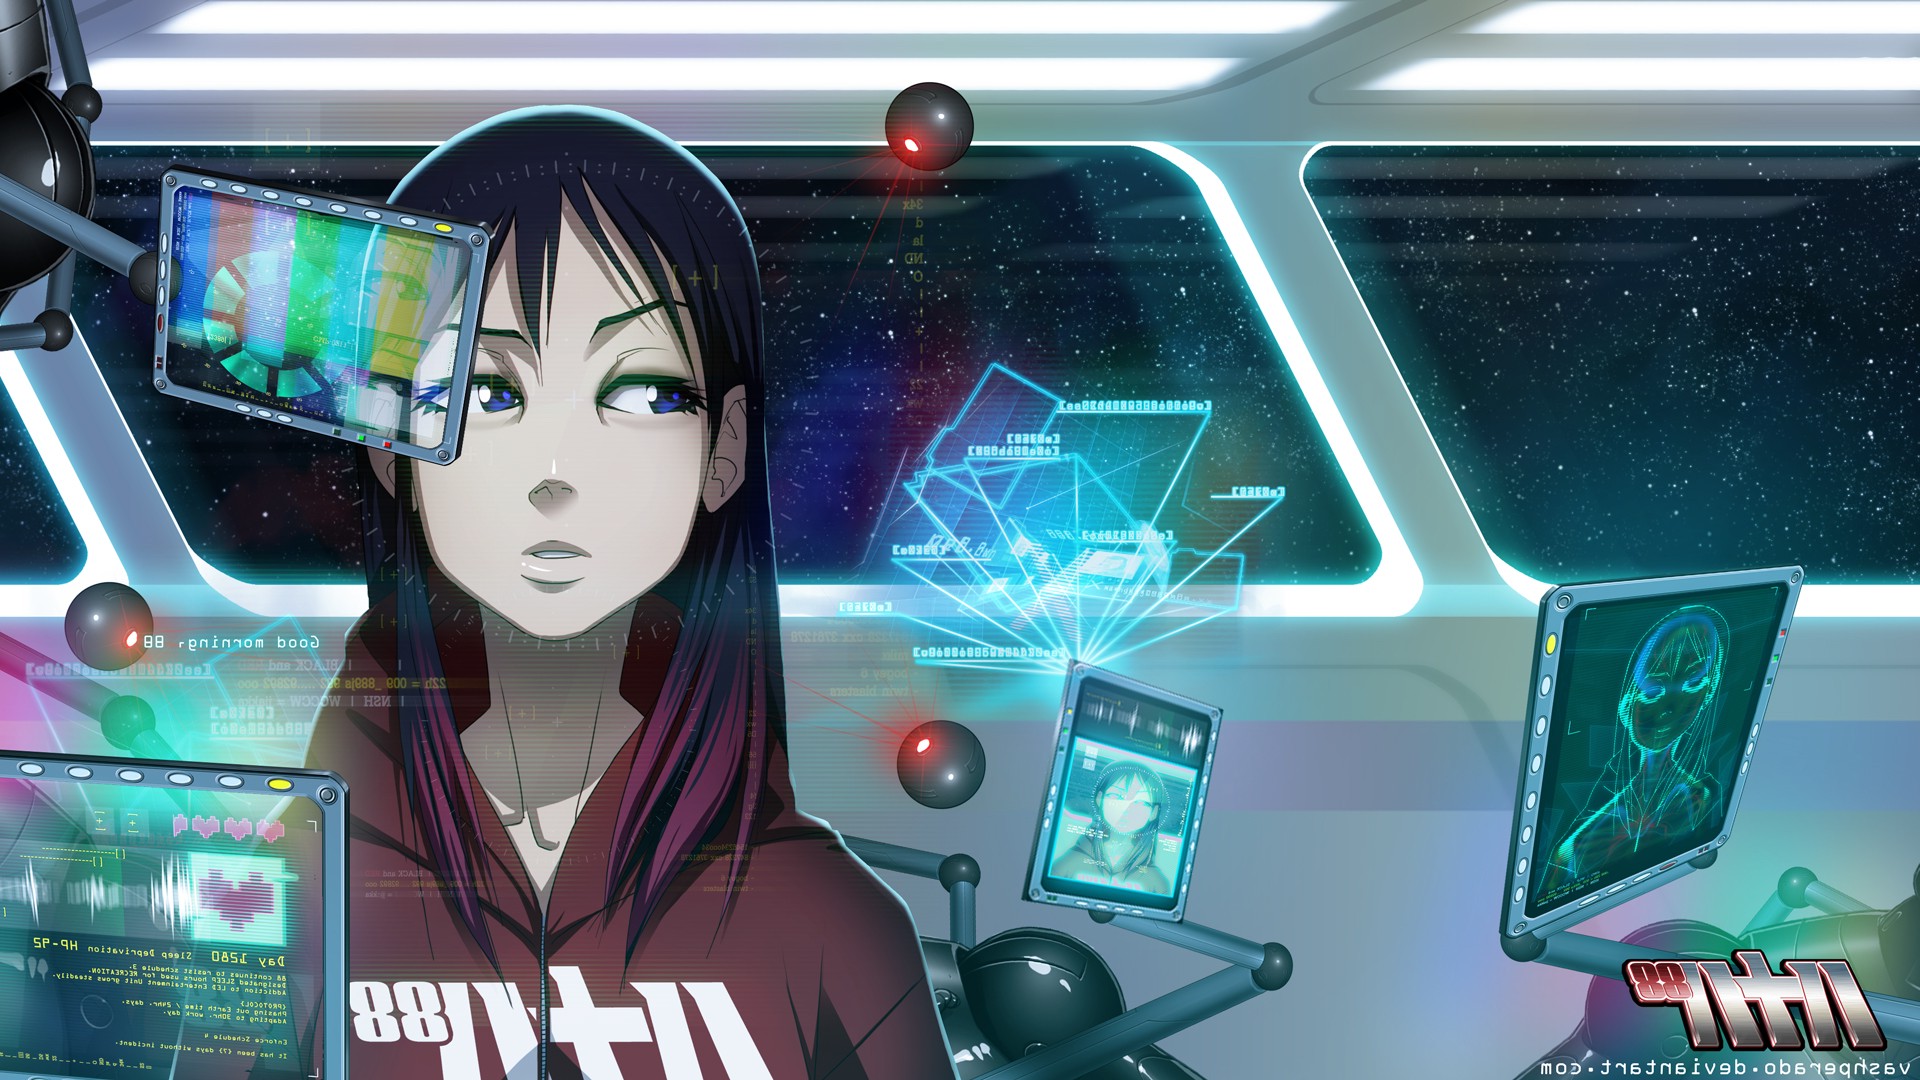 original Characters, Vashperado, Spaceship, Interfaces, Cyberpunk, Futuristic, Anime Girls, 88 Girl Wallpaper